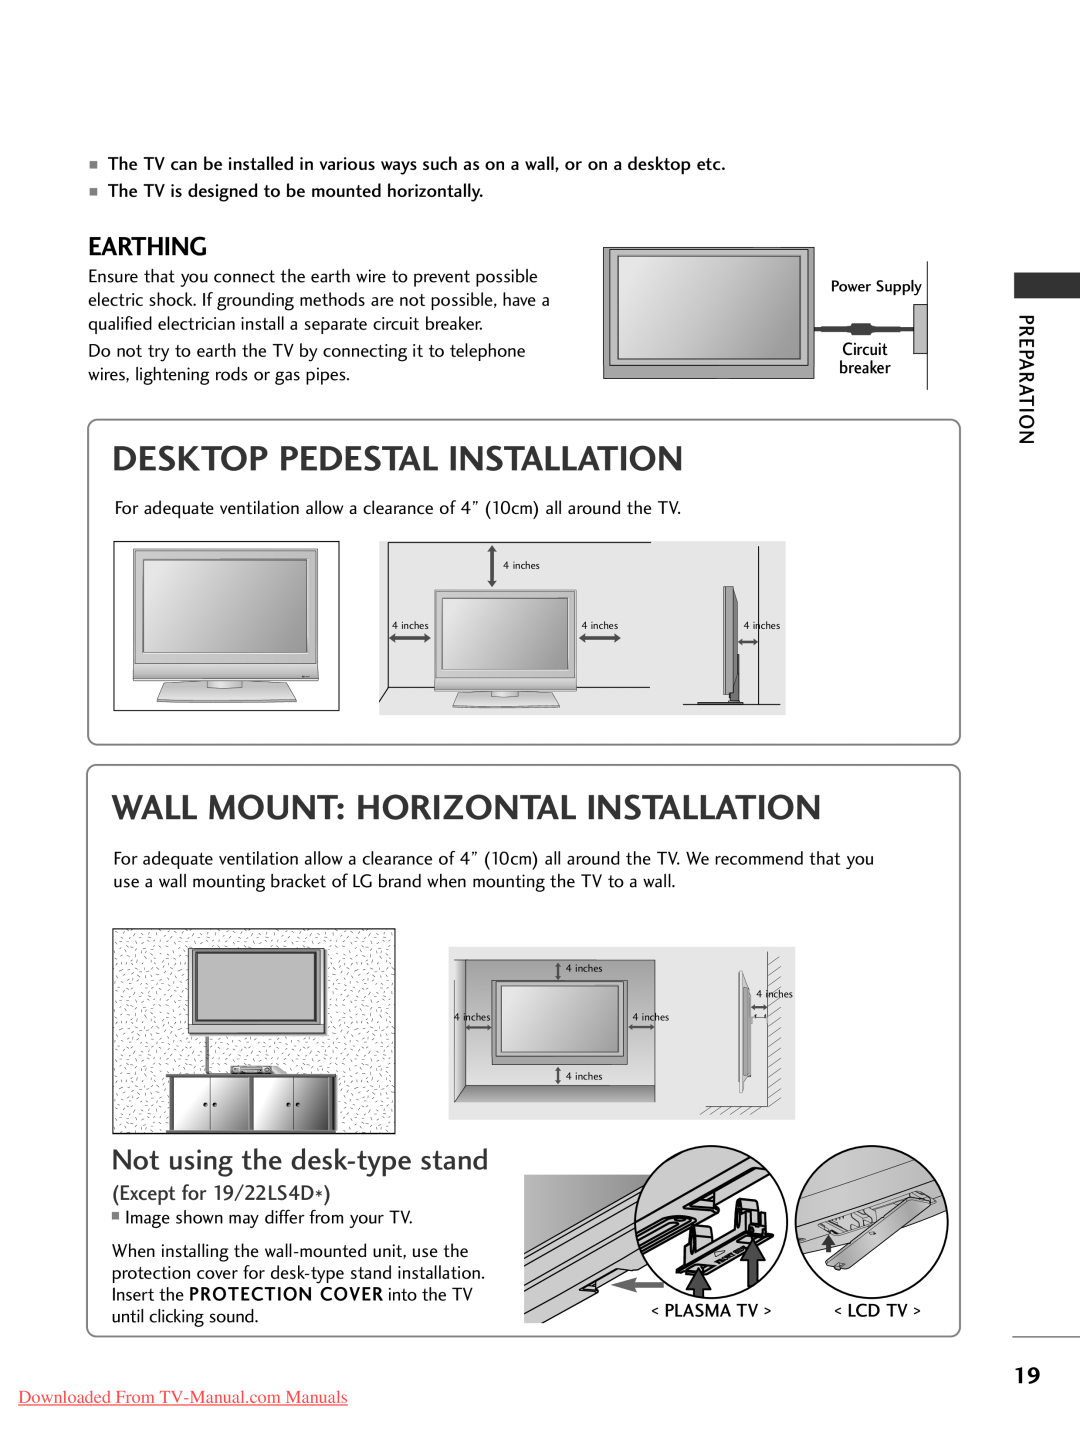 LG Electronics 42 2P PG G2 20, 42 2P PG G3 30 Desktop Pedestal Installation, Wall Mount Horizontal Installation, Earthing 